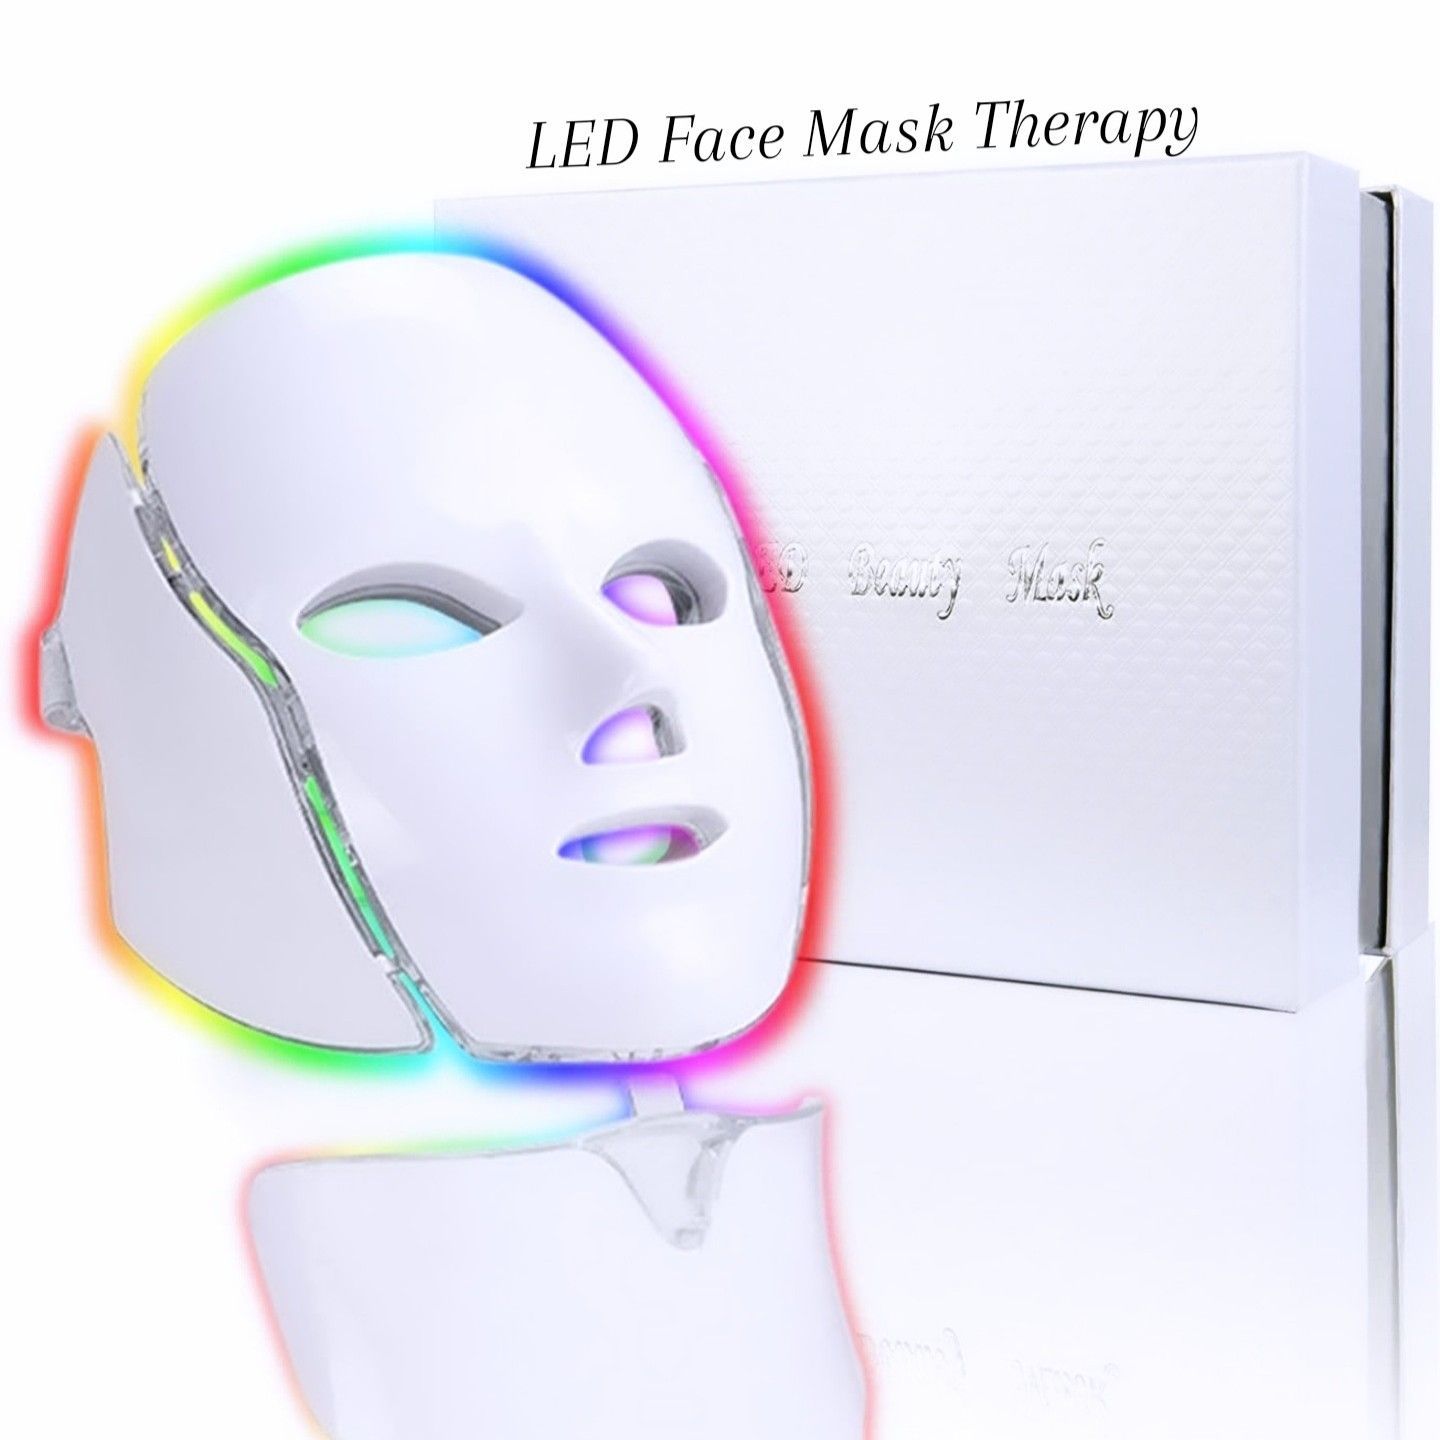 LED Light Therapy portfolio